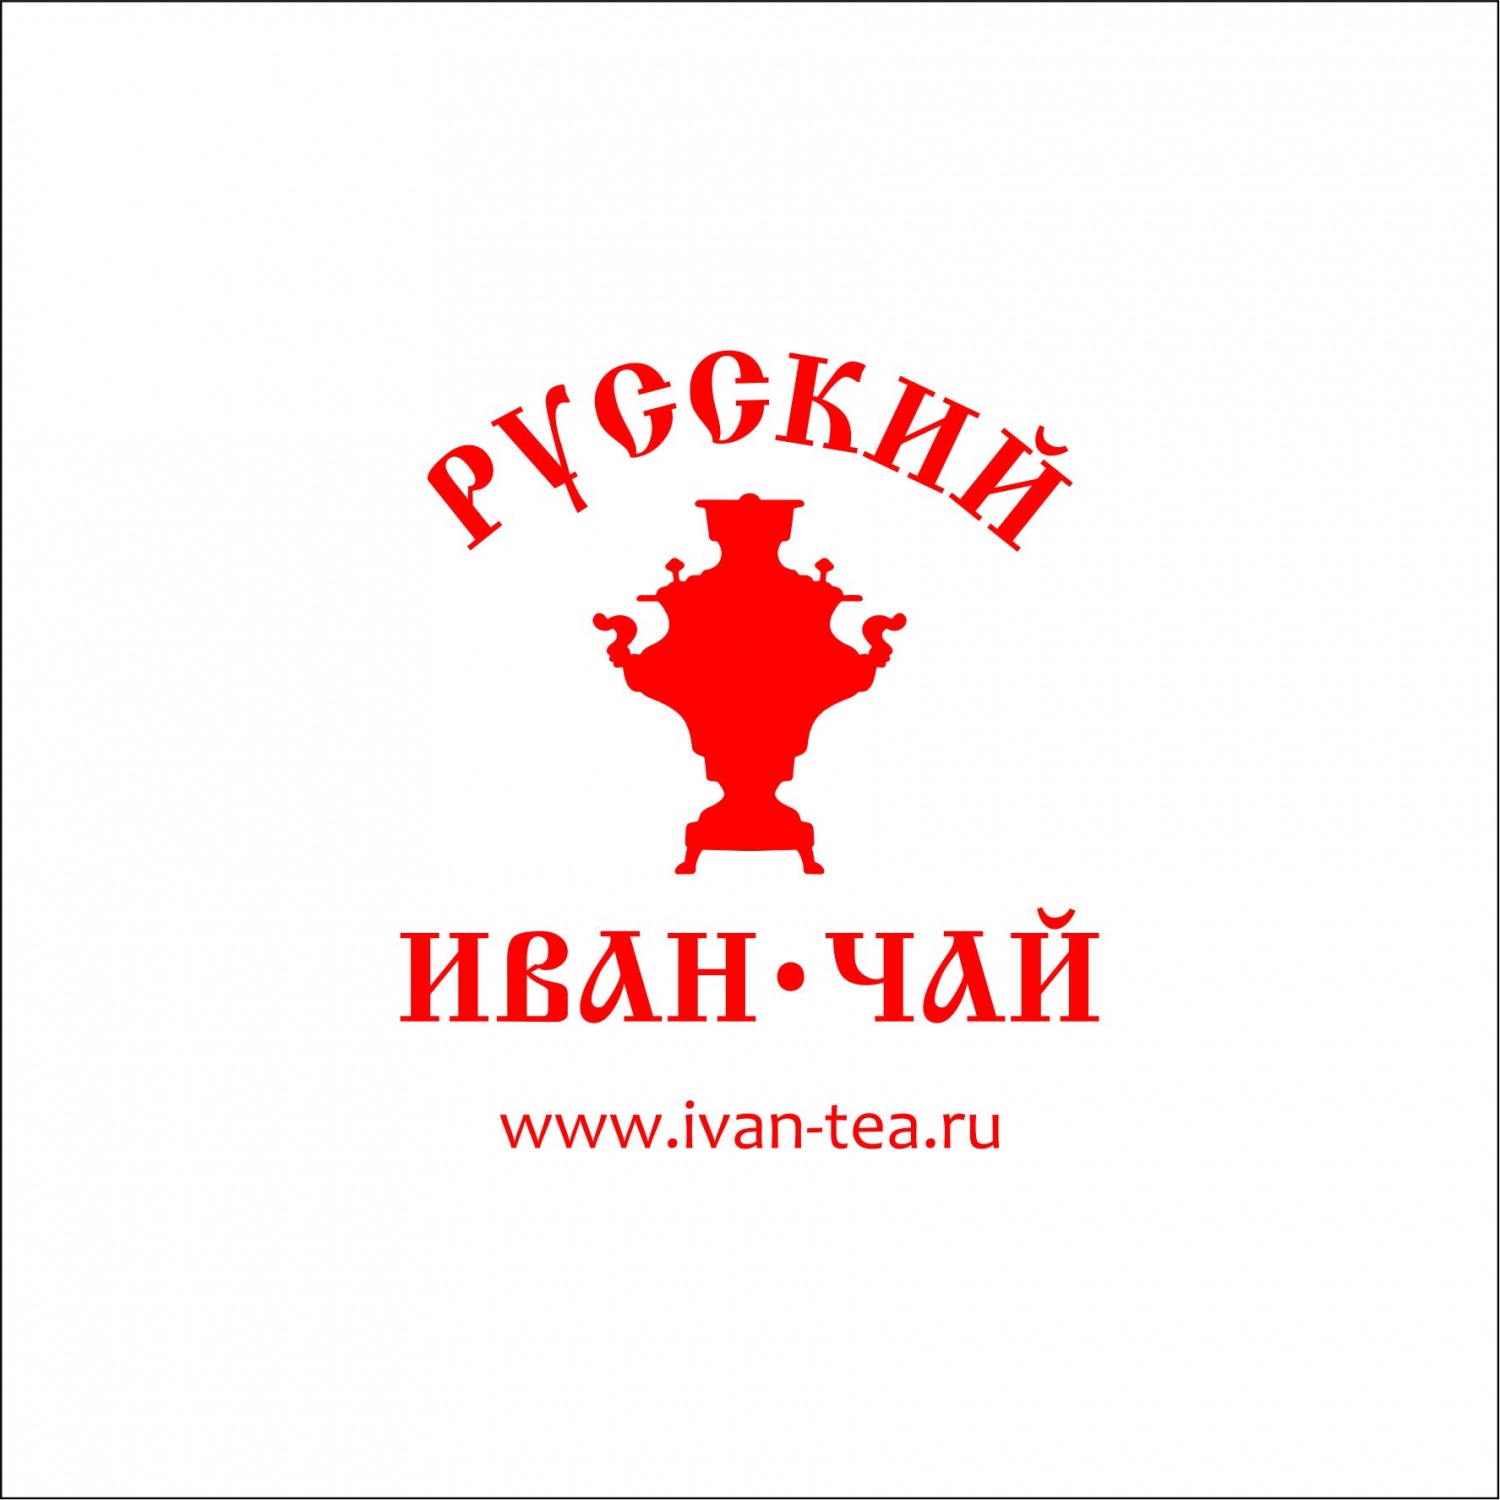 Tea Ru Интернет Магазин Чая